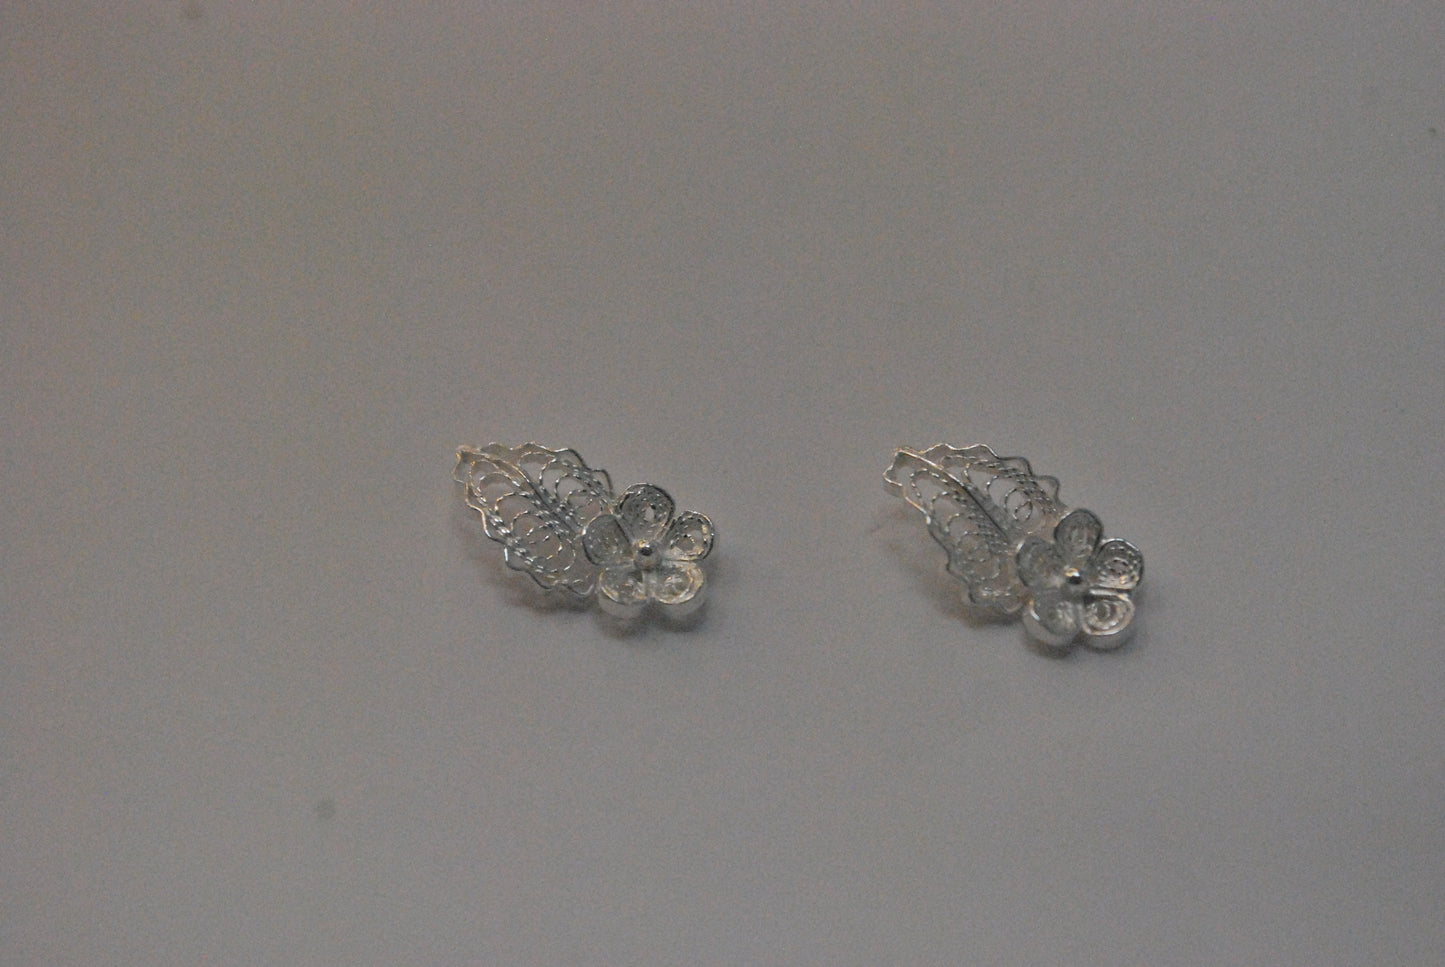 Tiny flower and leaf stud earrings